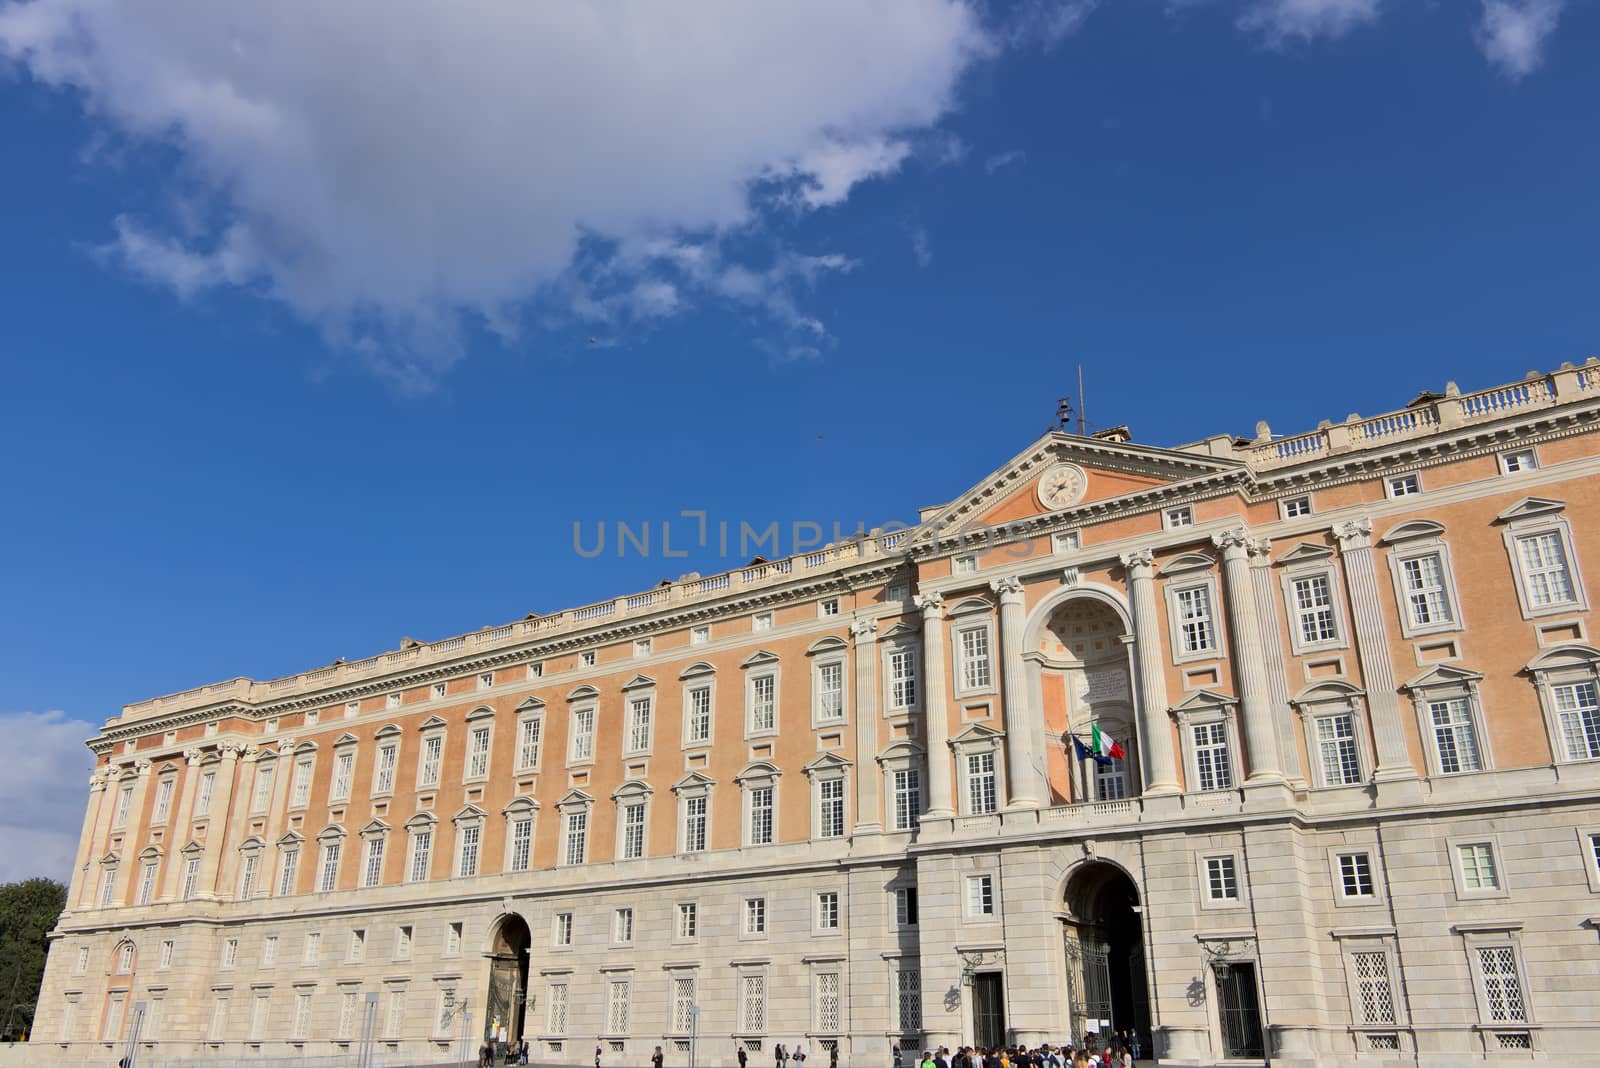 Main external facade of the Royal Palace of Caserta. Italy